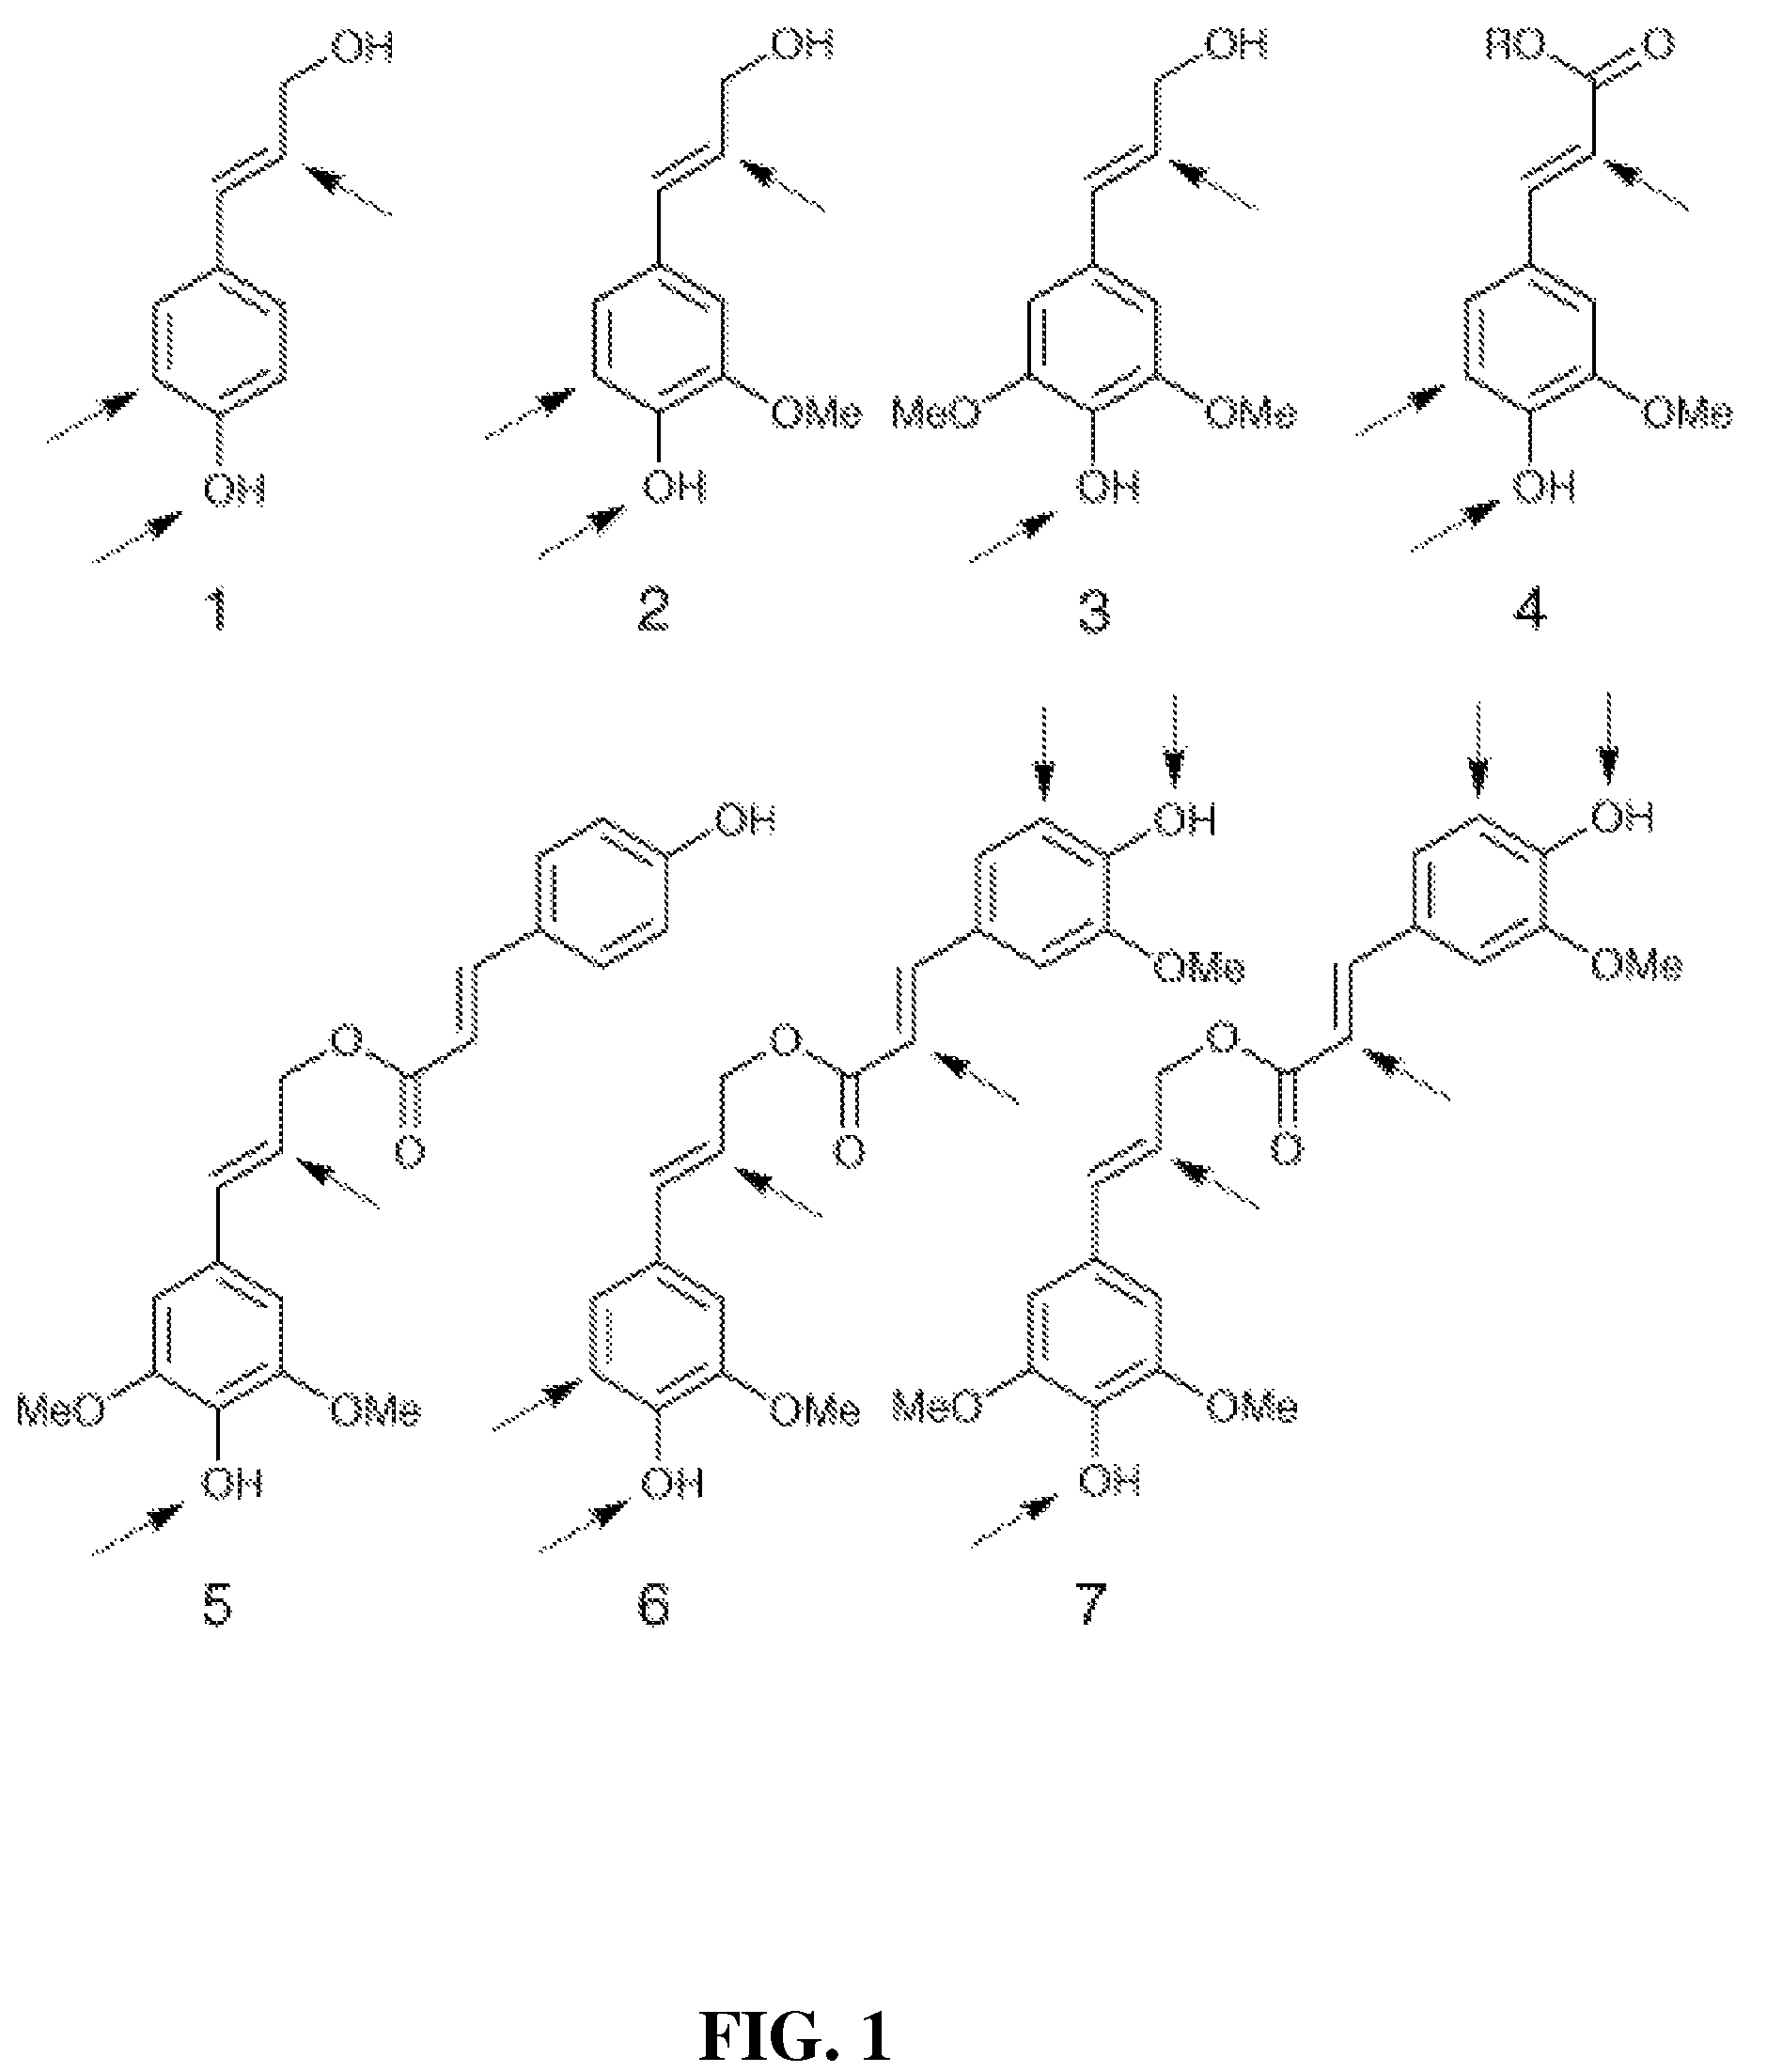 Method for modifying lignin structure using monolignol ferulate conjugates